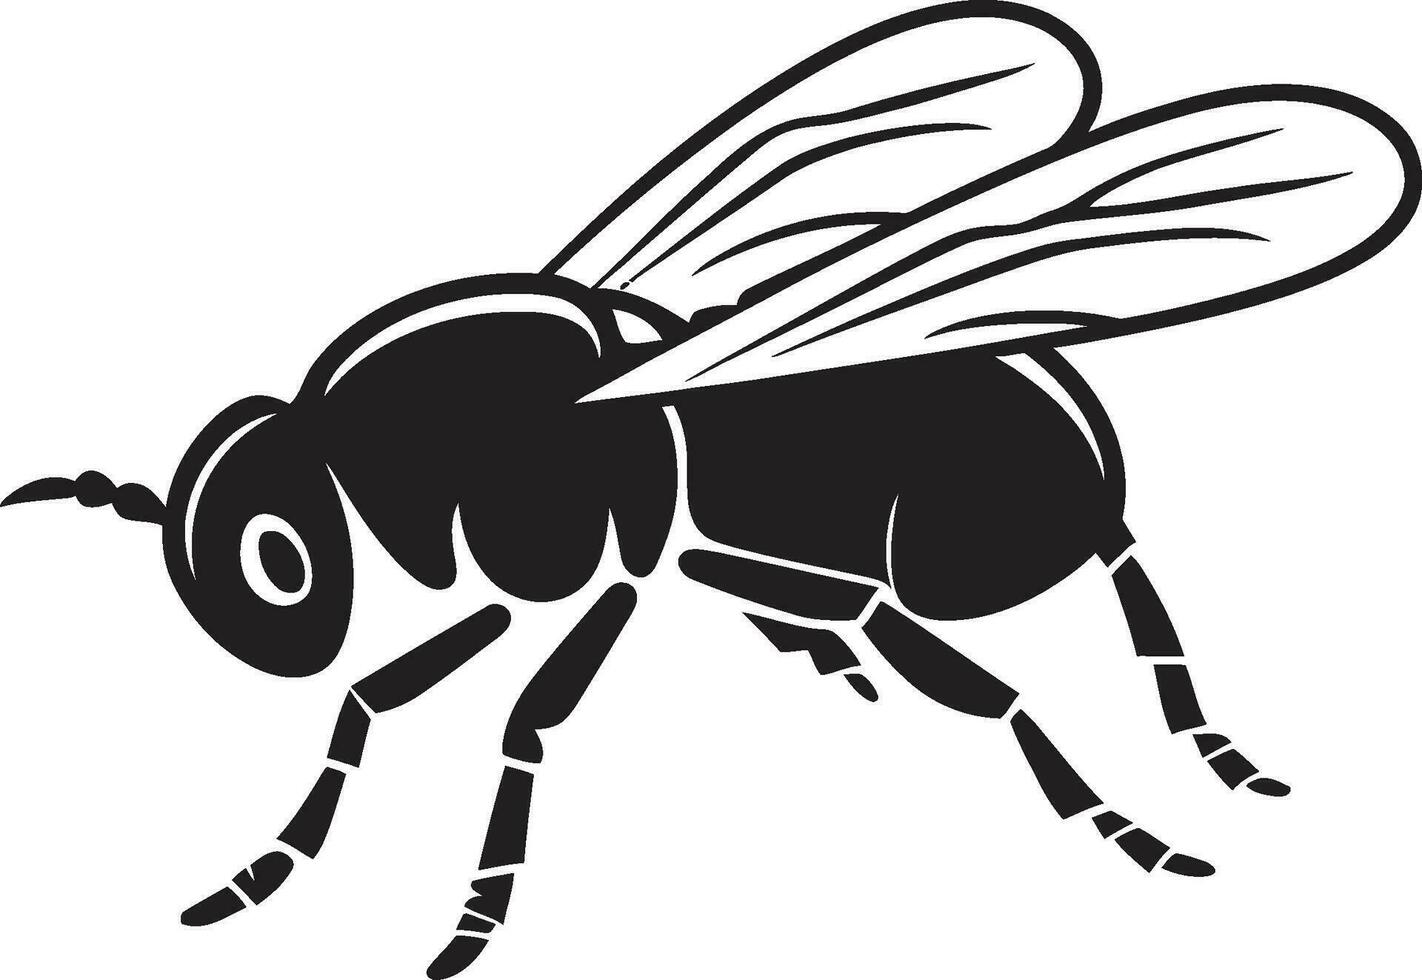 pulga gratis mascota logo un símbolo de salud y felicidad el pulga problema logo un símbolo de un común problema vector